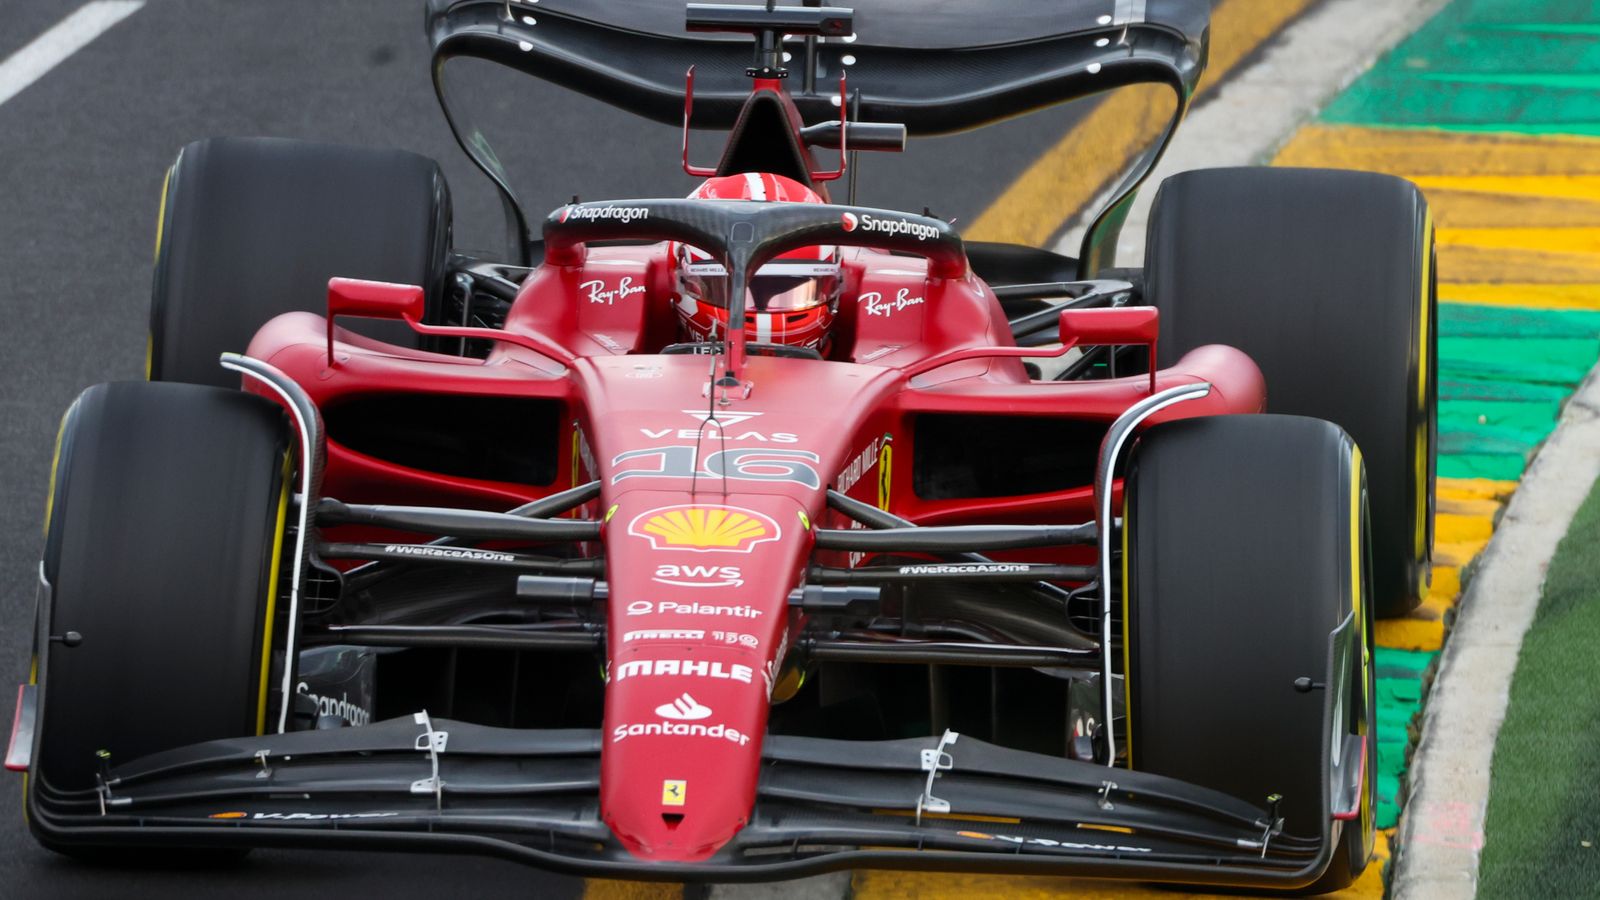 Clasificación del GP de Australia: Charles Leclerc vence a Max Verstappen y logra la pole para Ferrari, Mercedes mejora